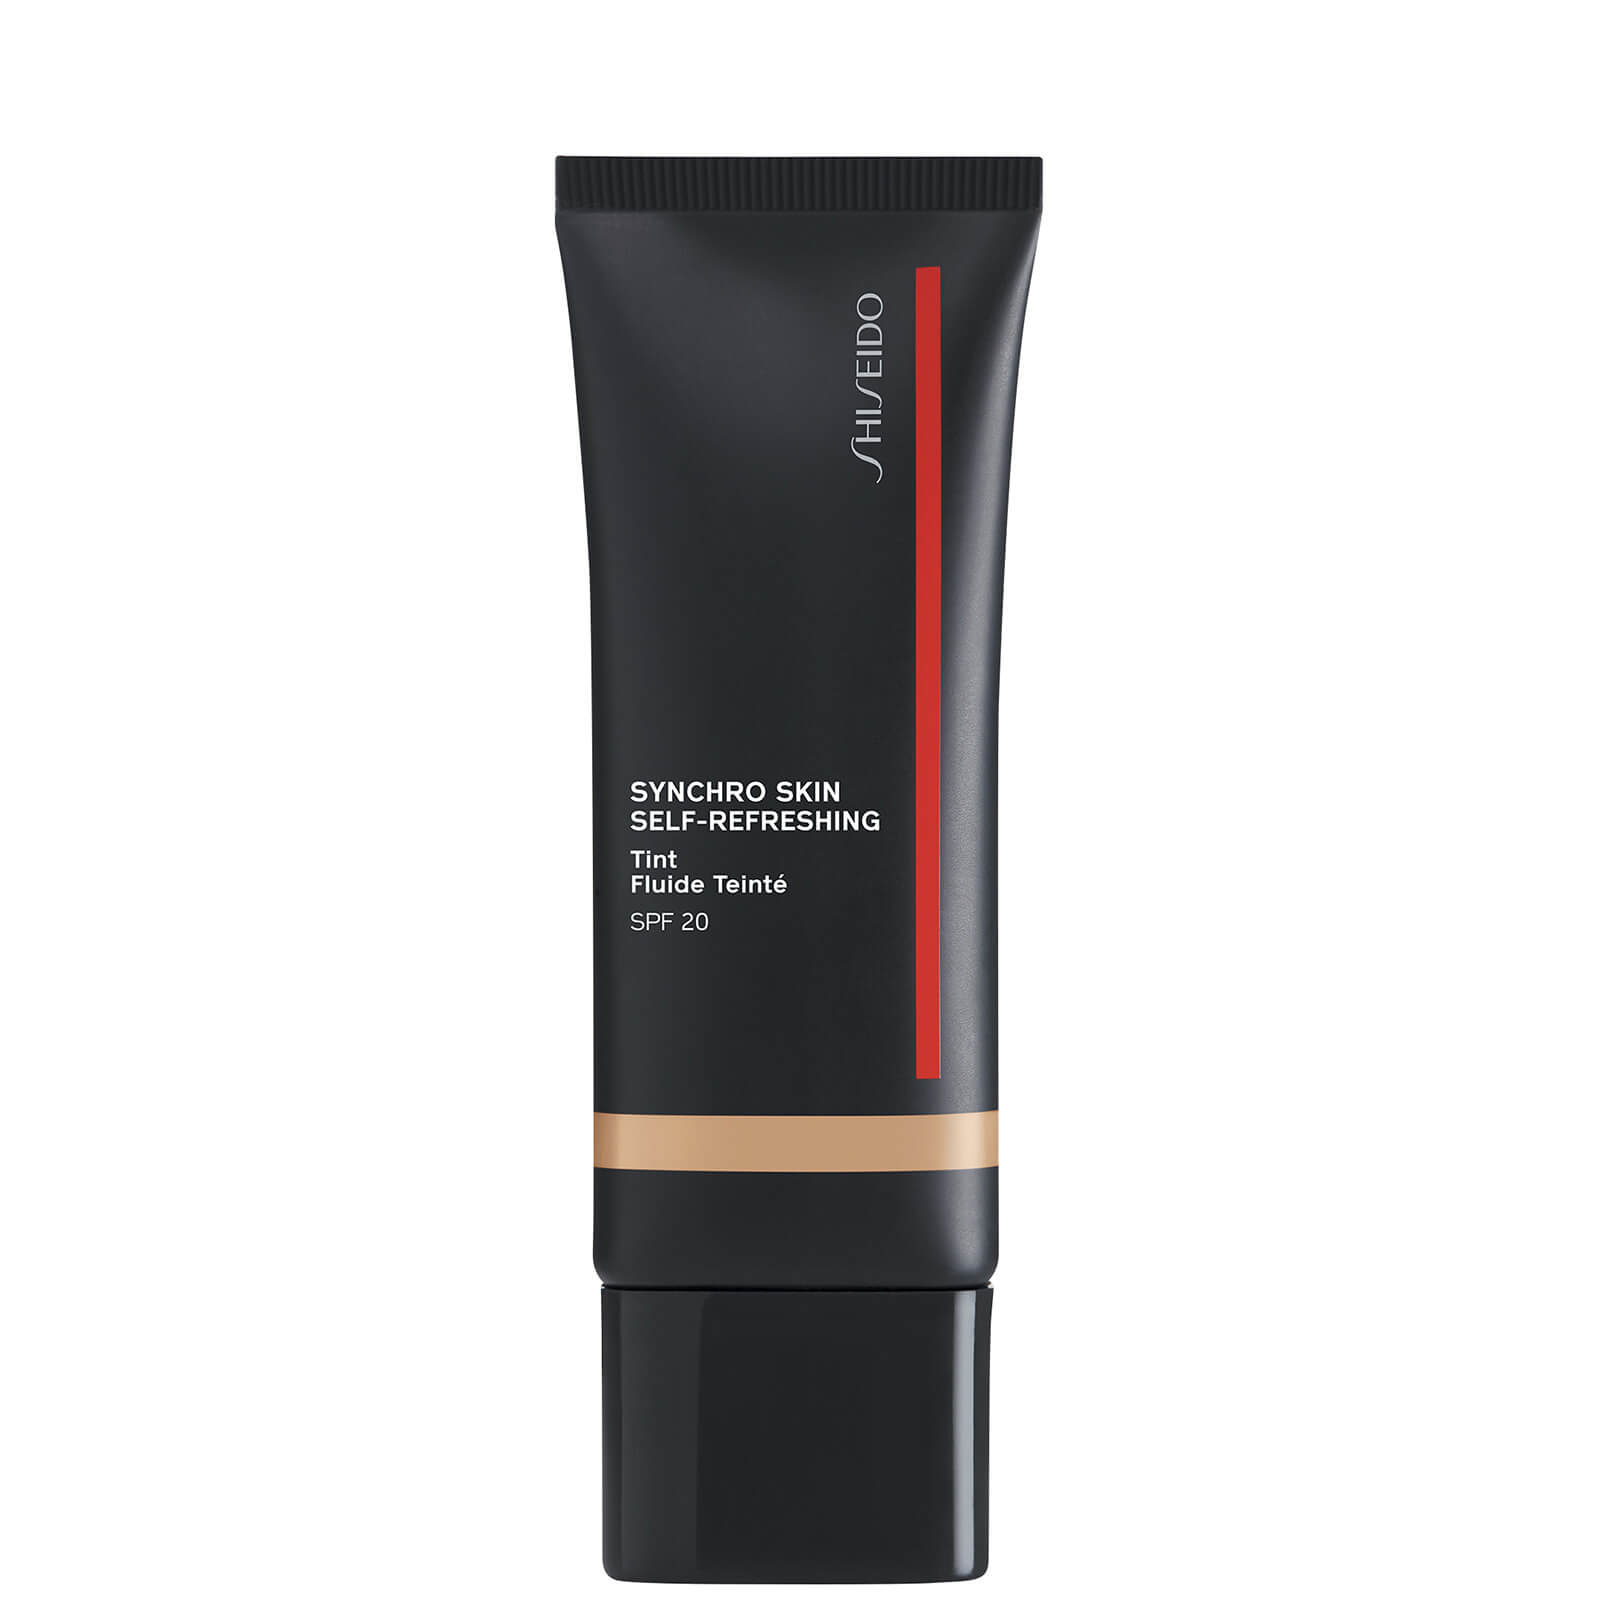 Zdjęcia - Podkład i baza pod makijaż Shiseido Synchro Skin Self Refreshing Tint 30ml  - Light M (Various Shades)